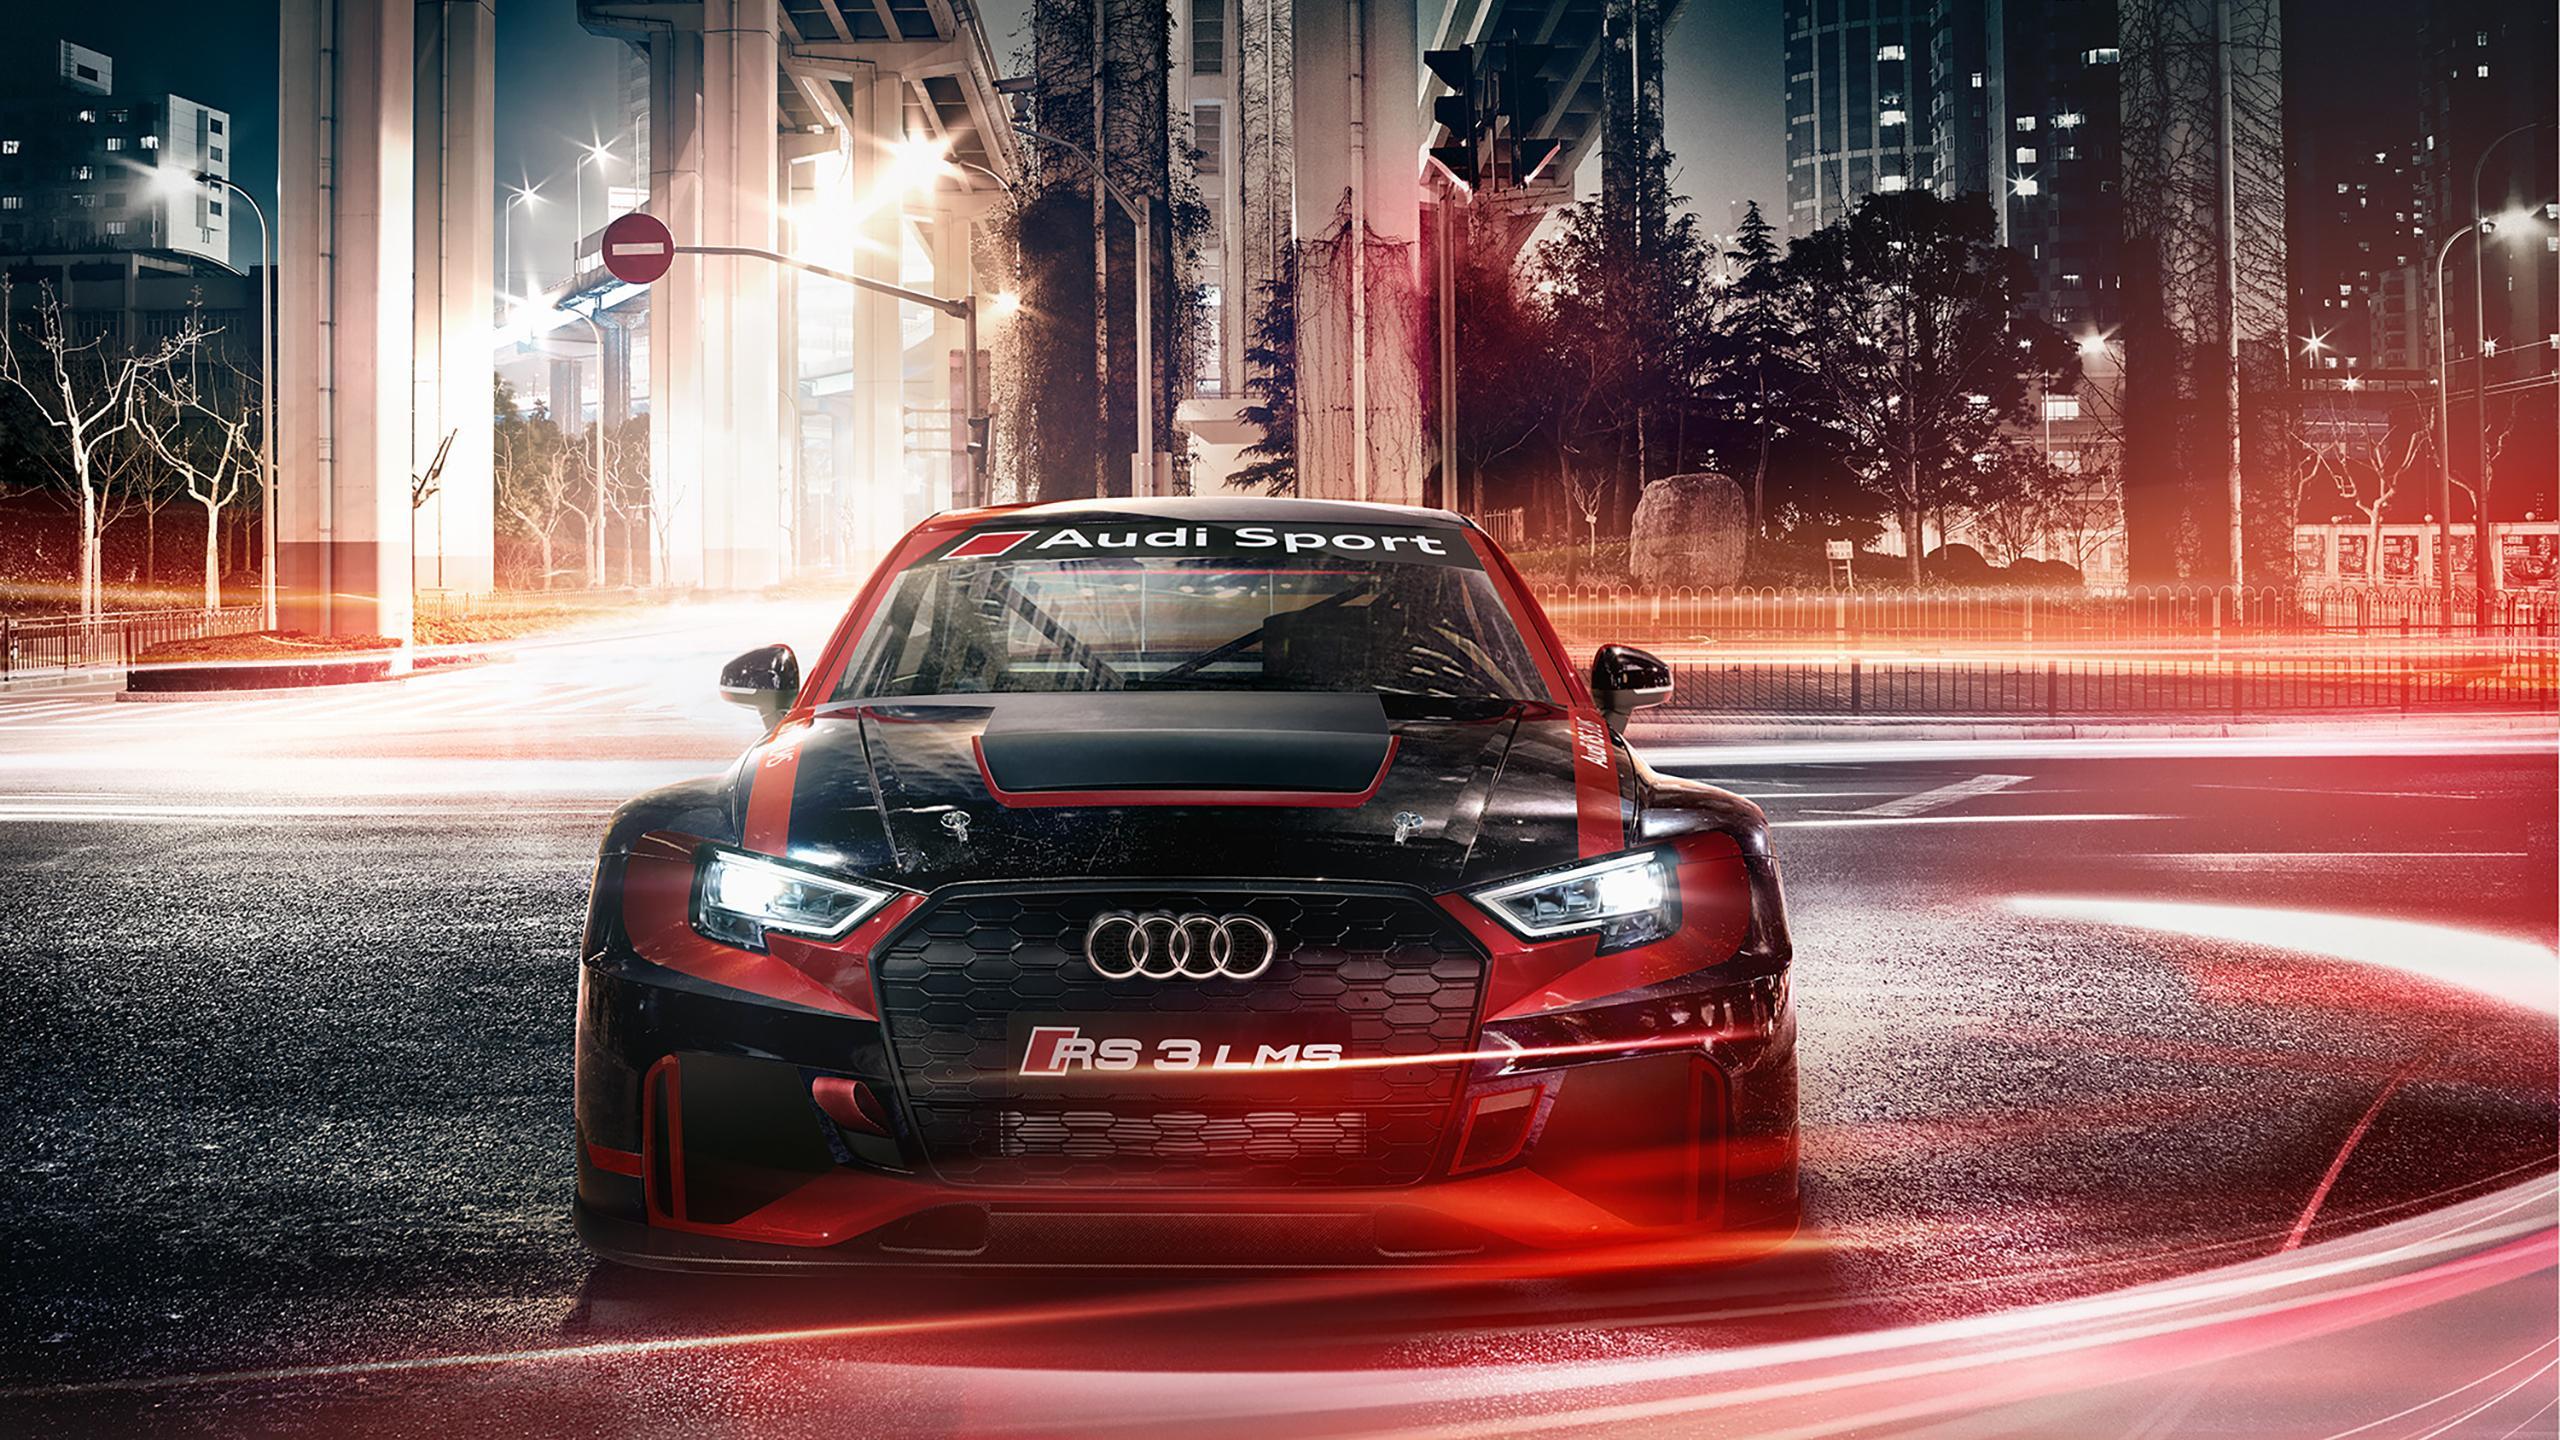 Audi RS 3 LMS Wallpaper. HD Car Wallpaper